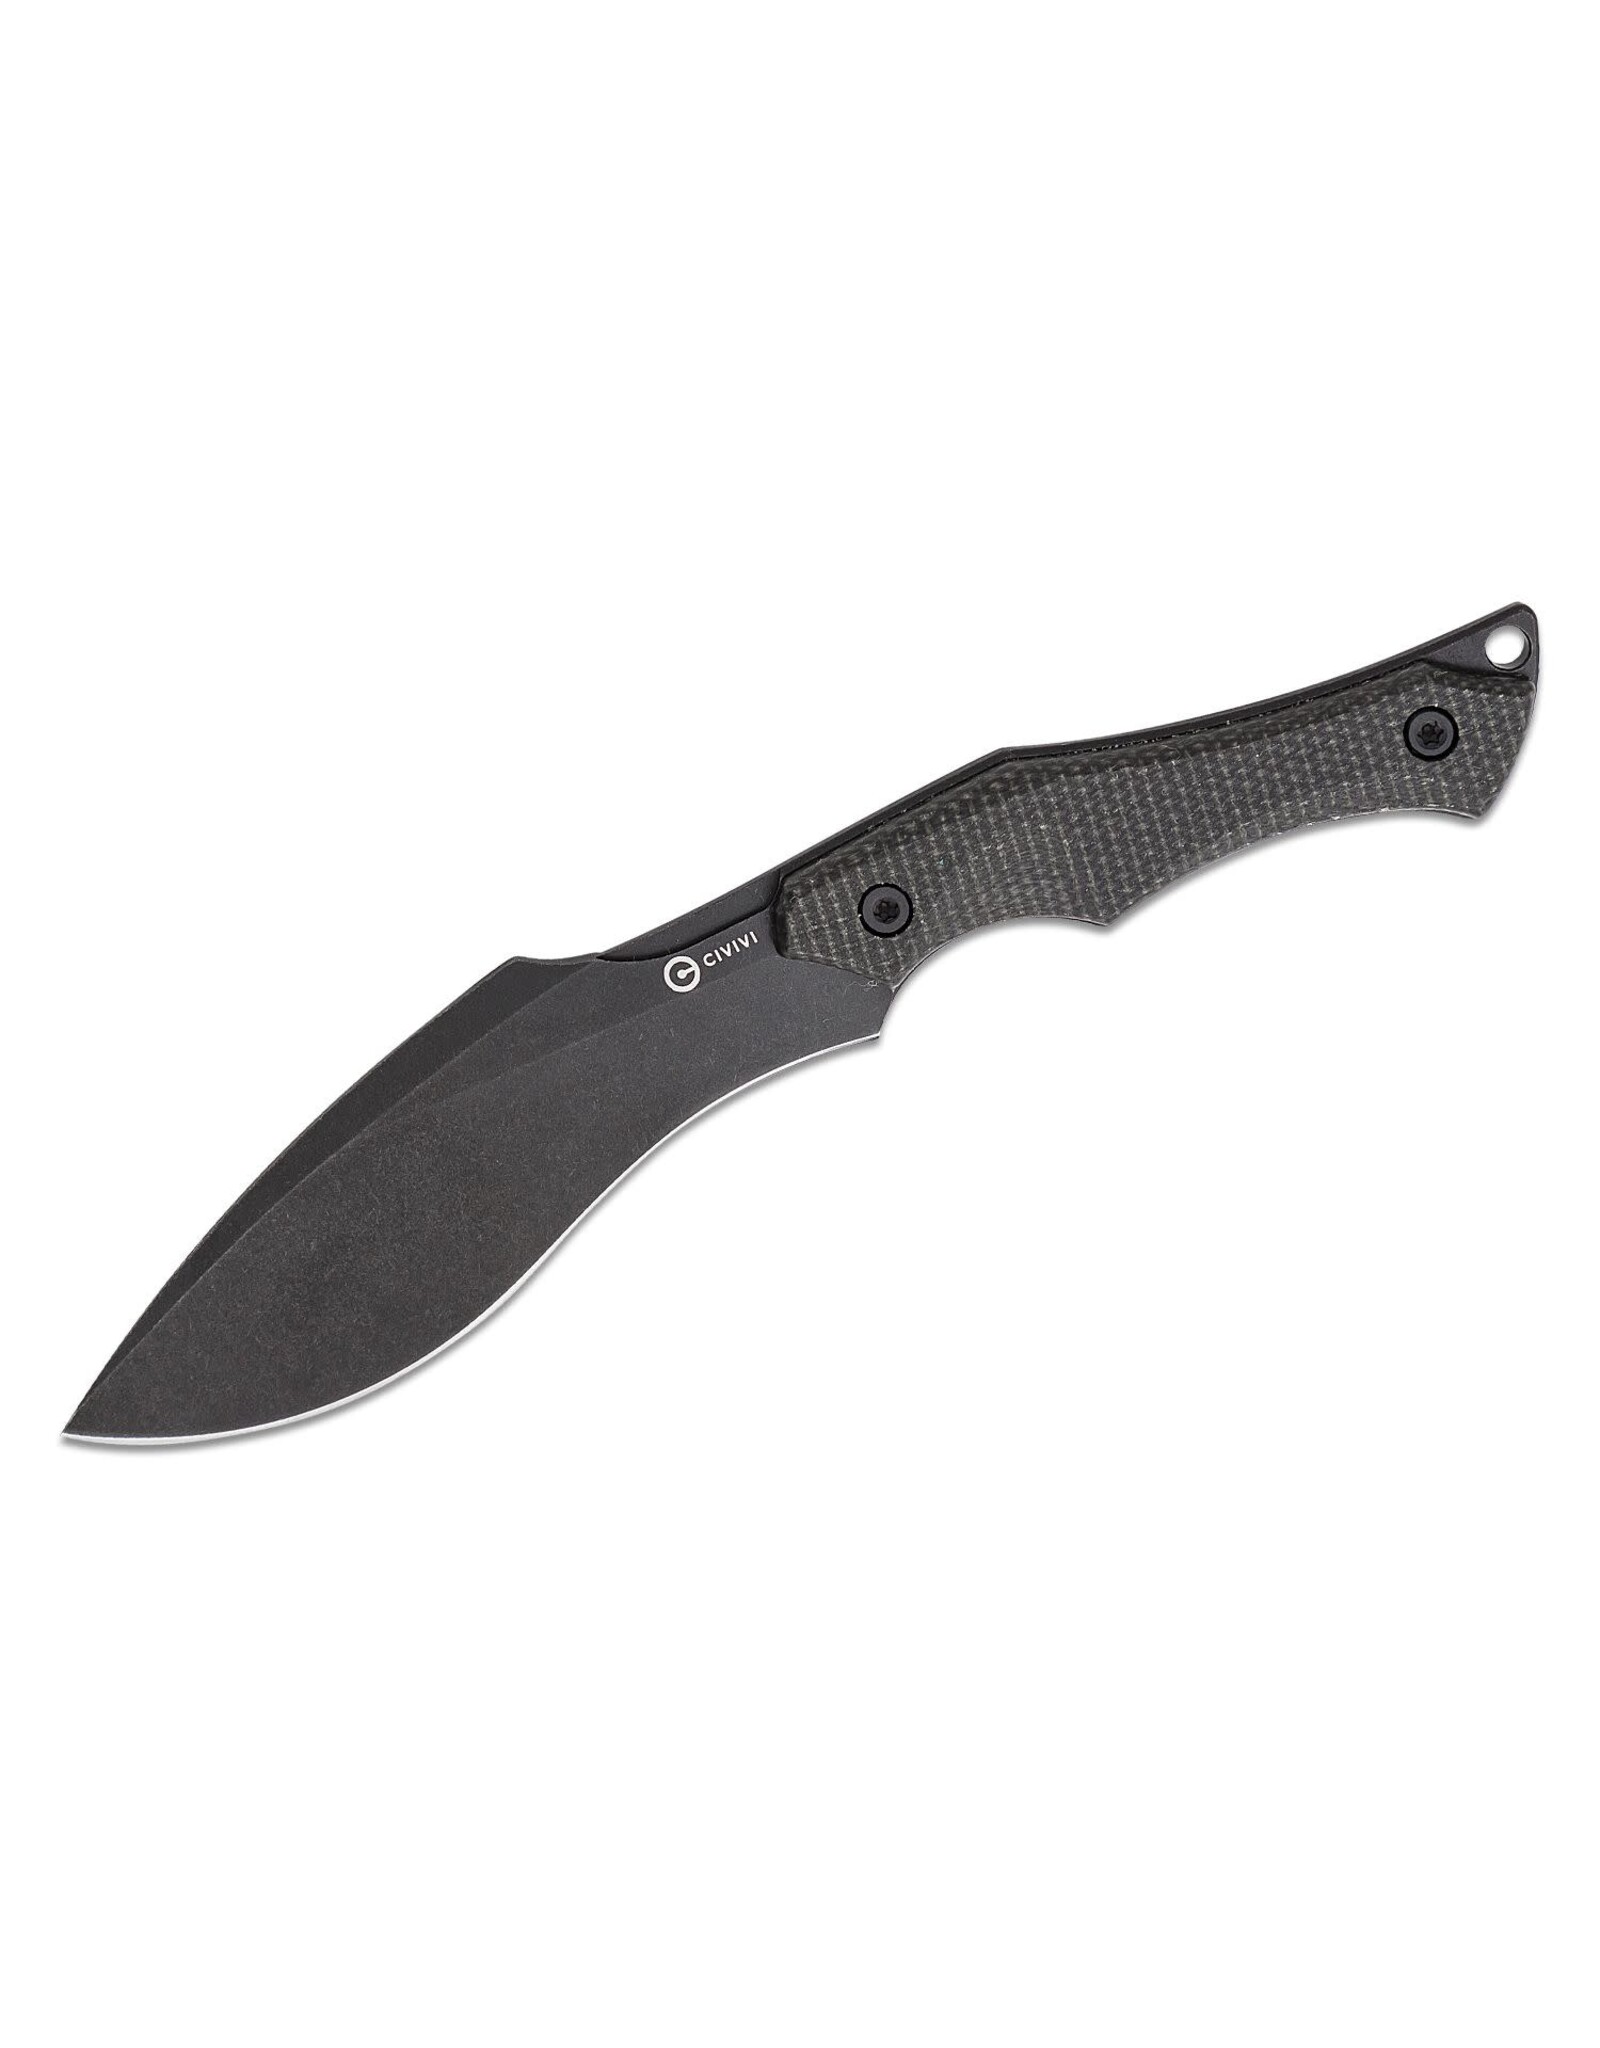 Civivi CIVIVI Knives Nathaneal Matlack Vaquita II Mini Fixed Blade Neck Knife 3.2" Nitro-V Black Stonewashed Kukri Blade, Dark Green Canvas Micarta Handles, Kydex Sheath - C047C-3